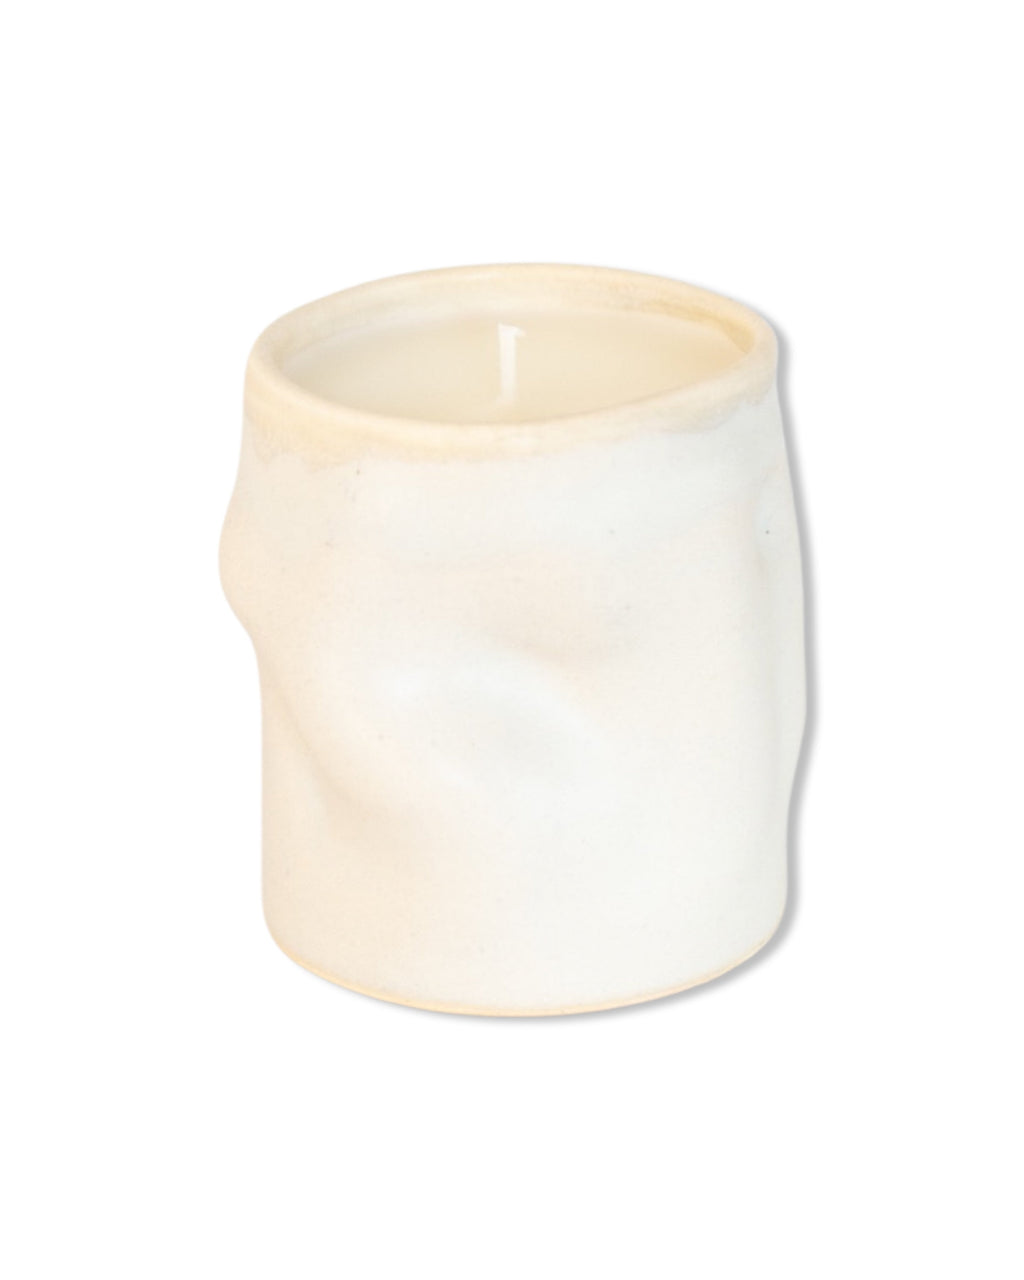 Fig Bone White Ceramic Candle by Nonporous Ceramics